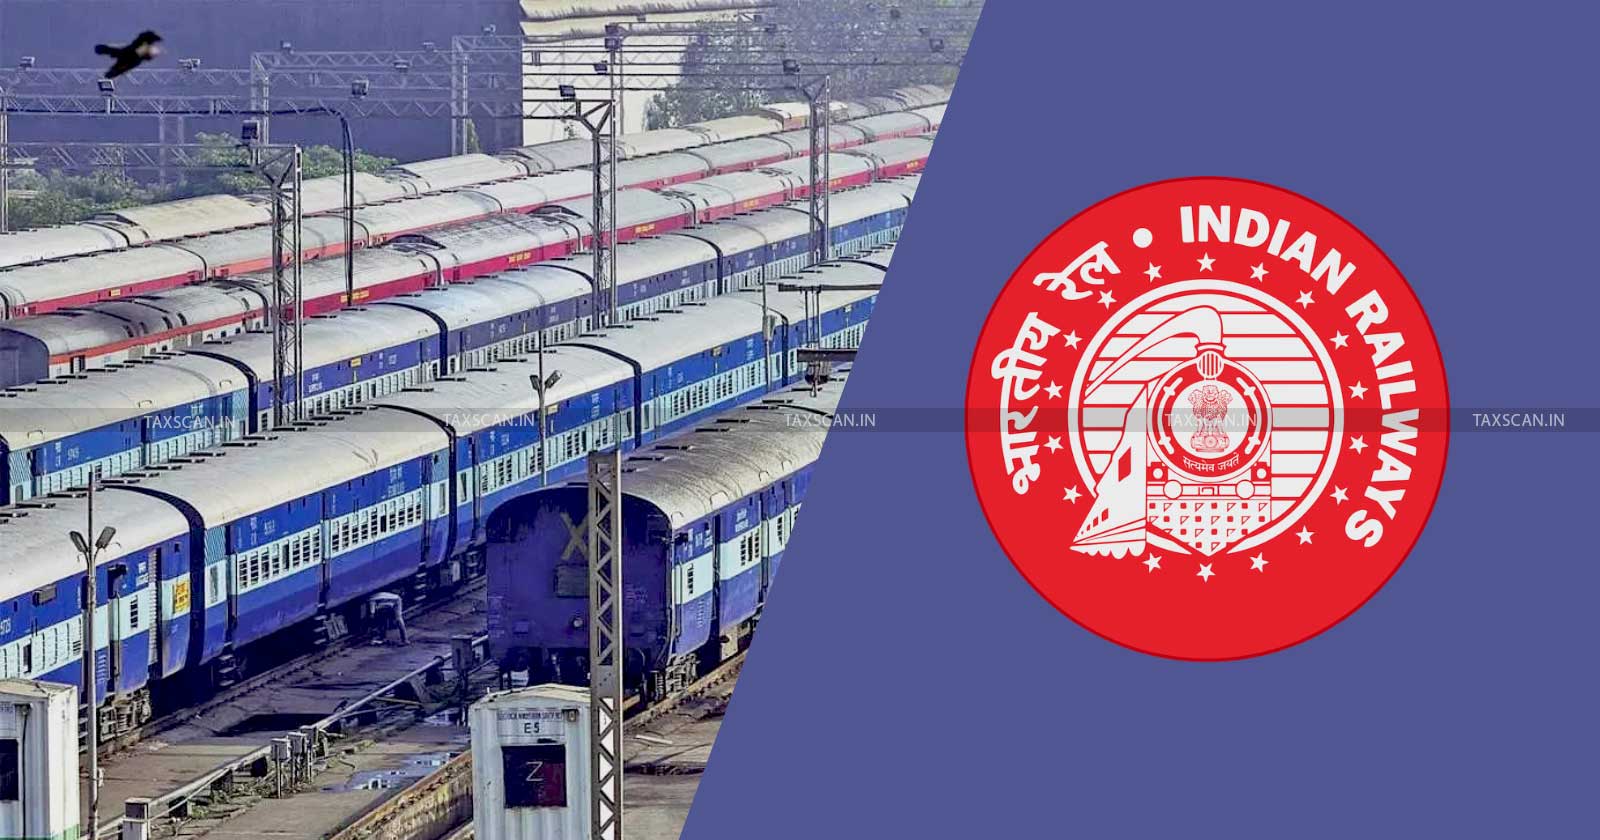 GST Council Meeting - GST Council - GST exemption for railway - Indian Railways GST news - taxscan